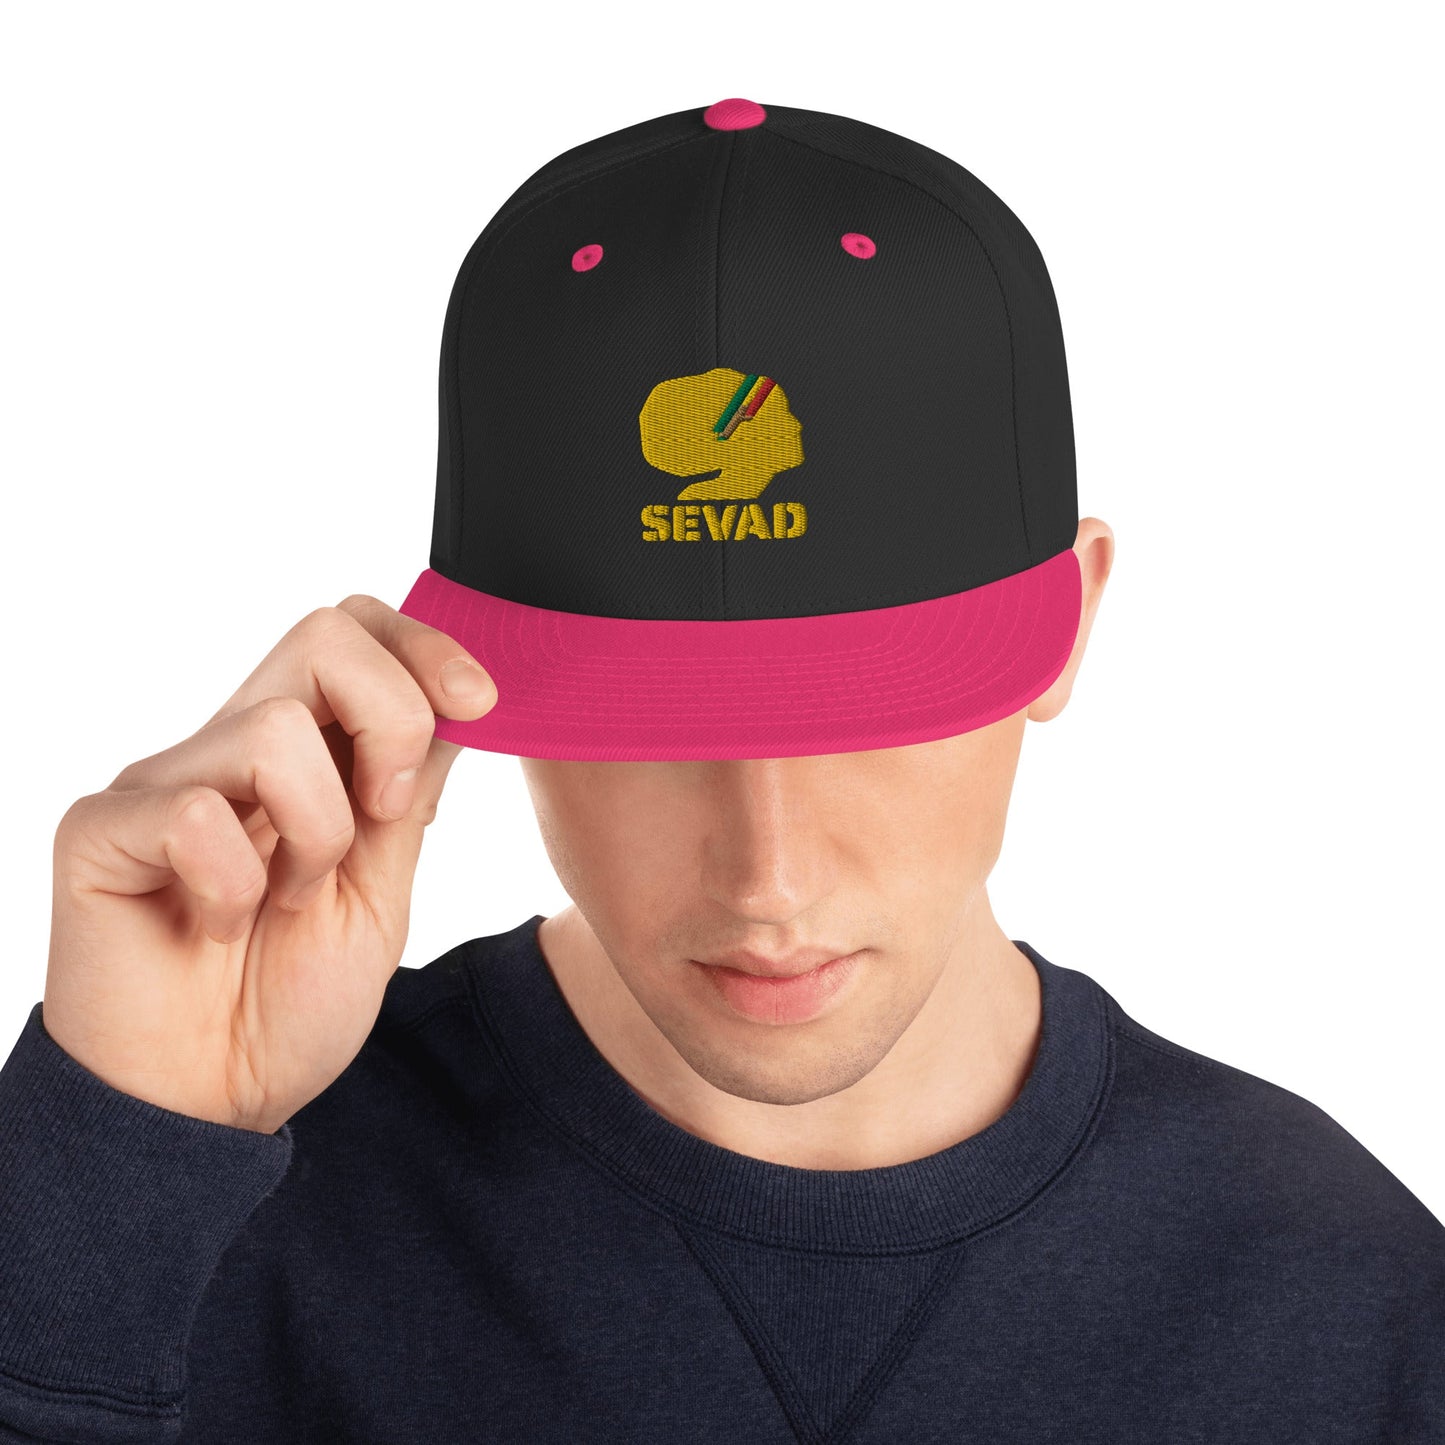 SEVAD Snapback Hat - SEVAD MUSIC HOUSE - Snapback Hat - SEVAD MUSIC HOUSE - 7123262_7843 - Black/ Neon Pink - - SEVAD Snapback Hat